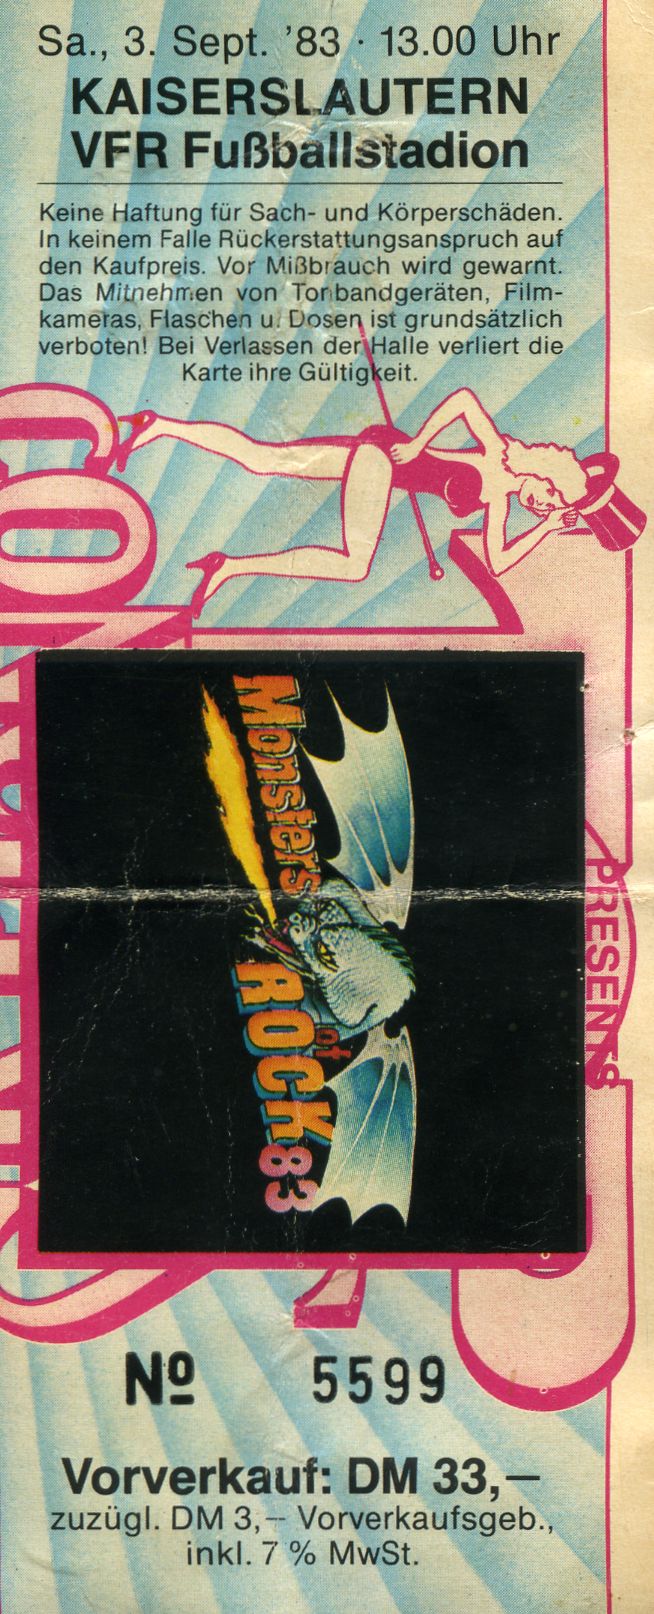 Monsters of Rock 1983 Kaiserslautern ticket.jpg